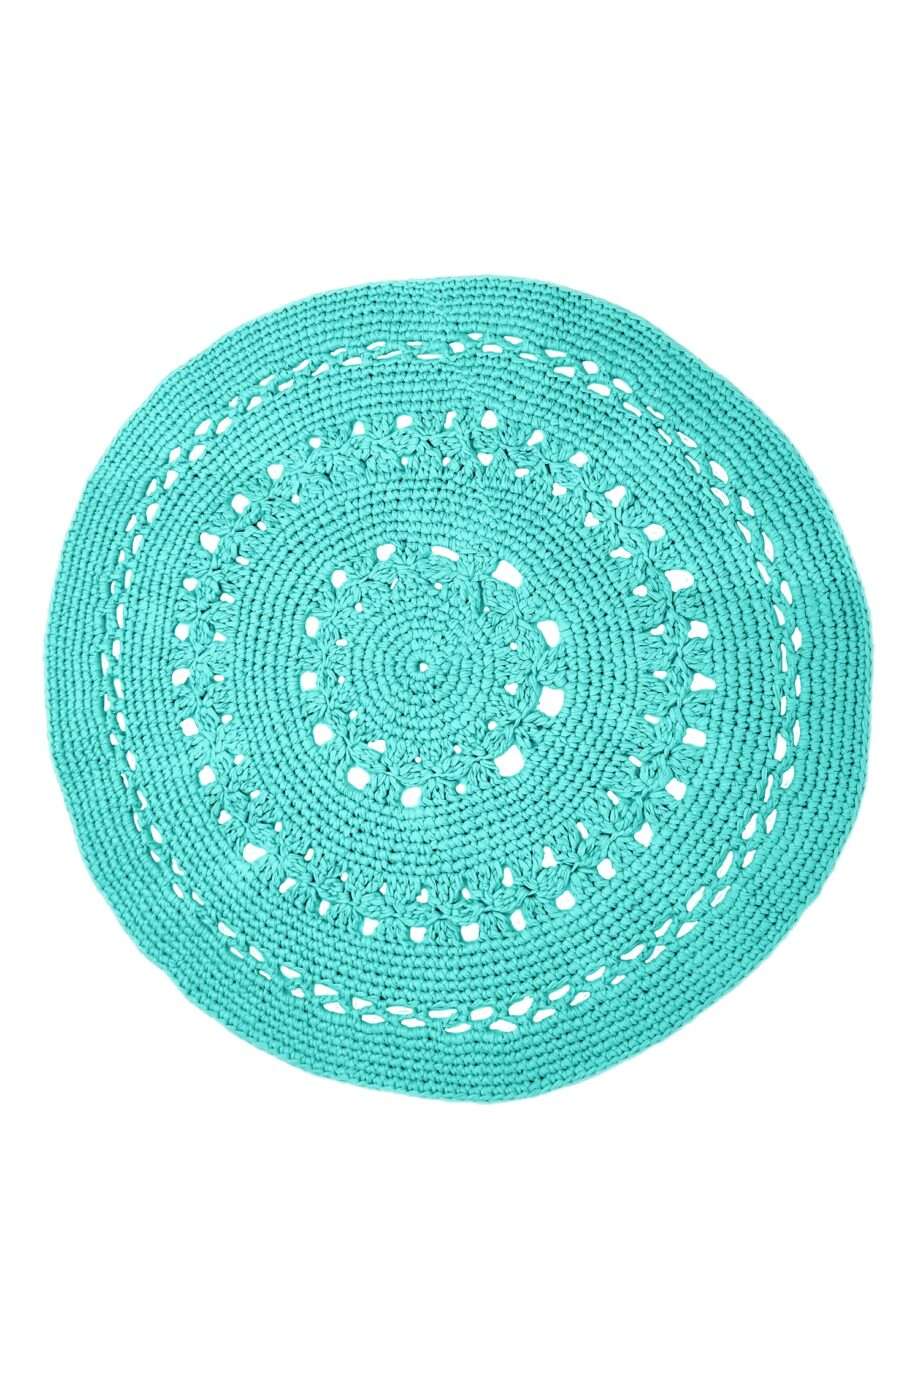 flor turquoise crochet cotton rug xlarge